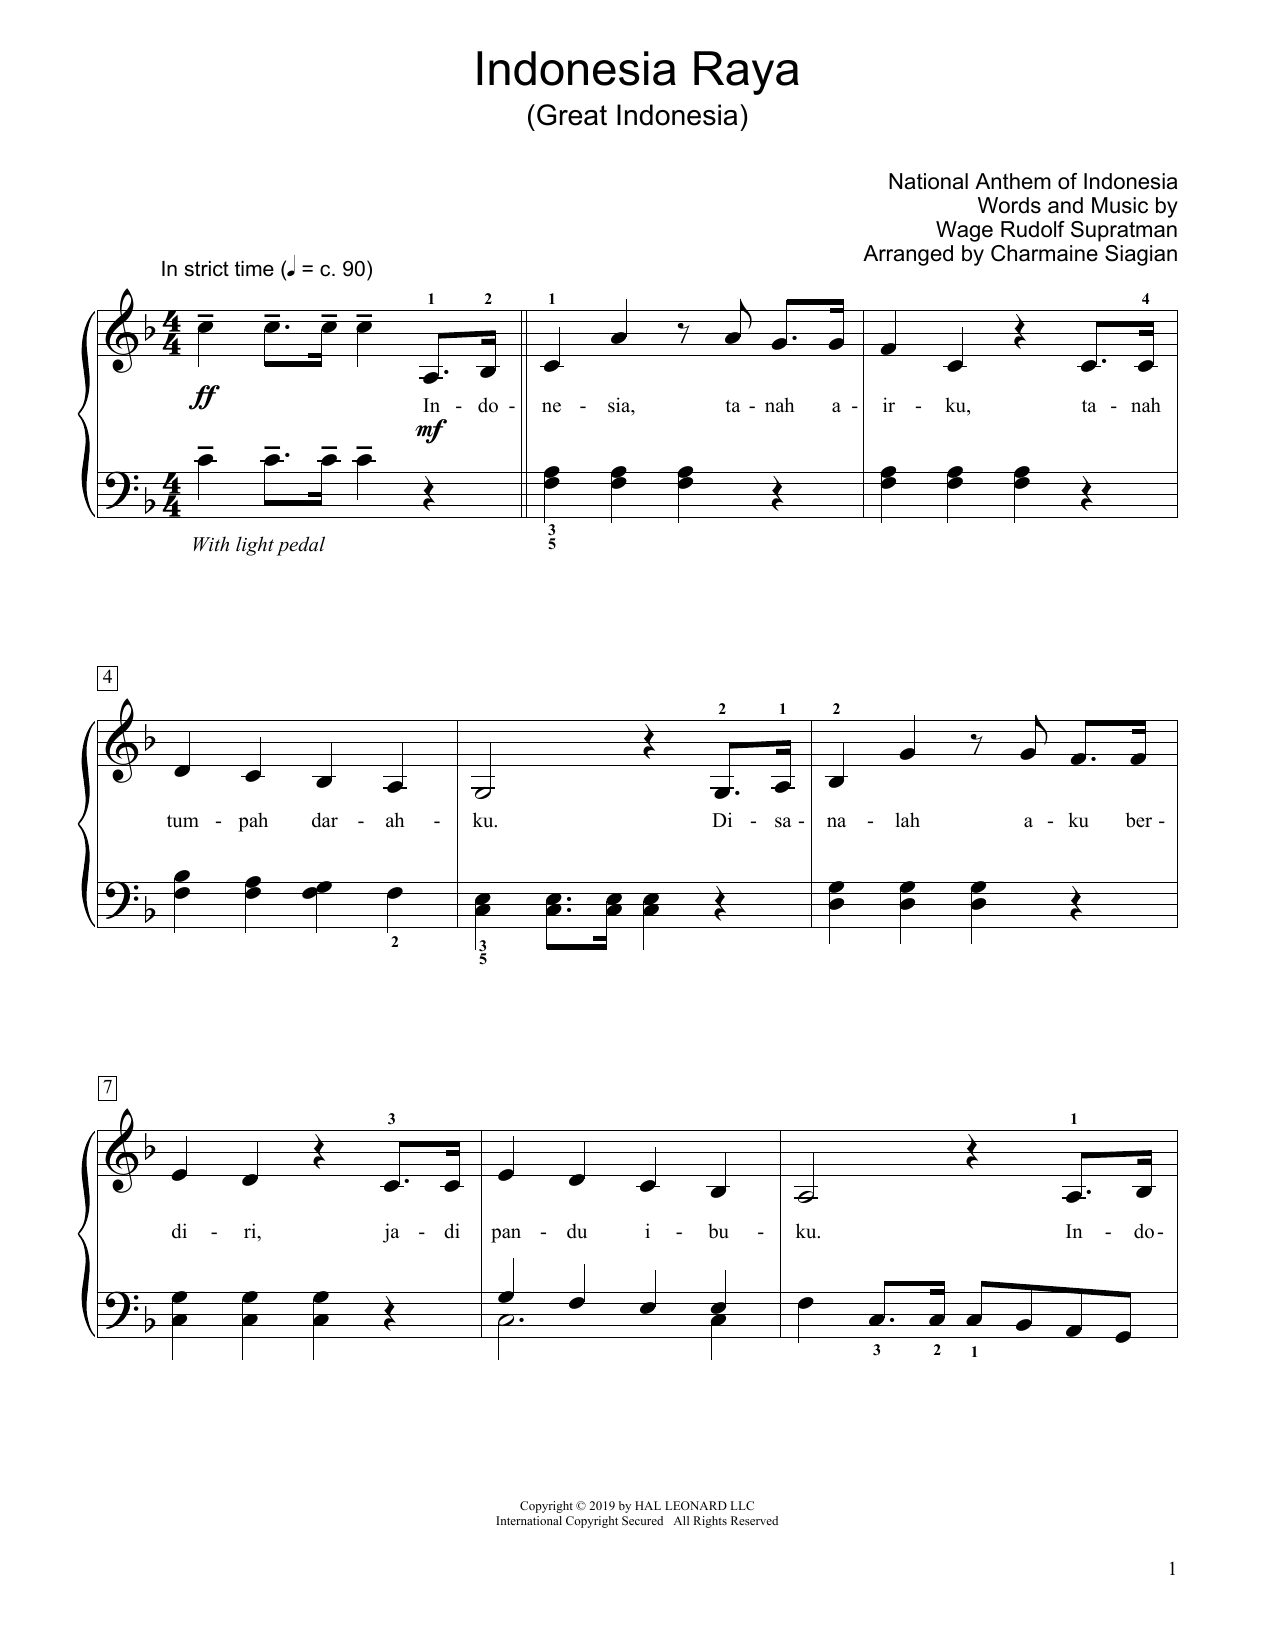 Great Indonesia (Indonesia Raya) (arr. Charmaine Siagian) (Educational Piano) von Wage Rudolf Supratman